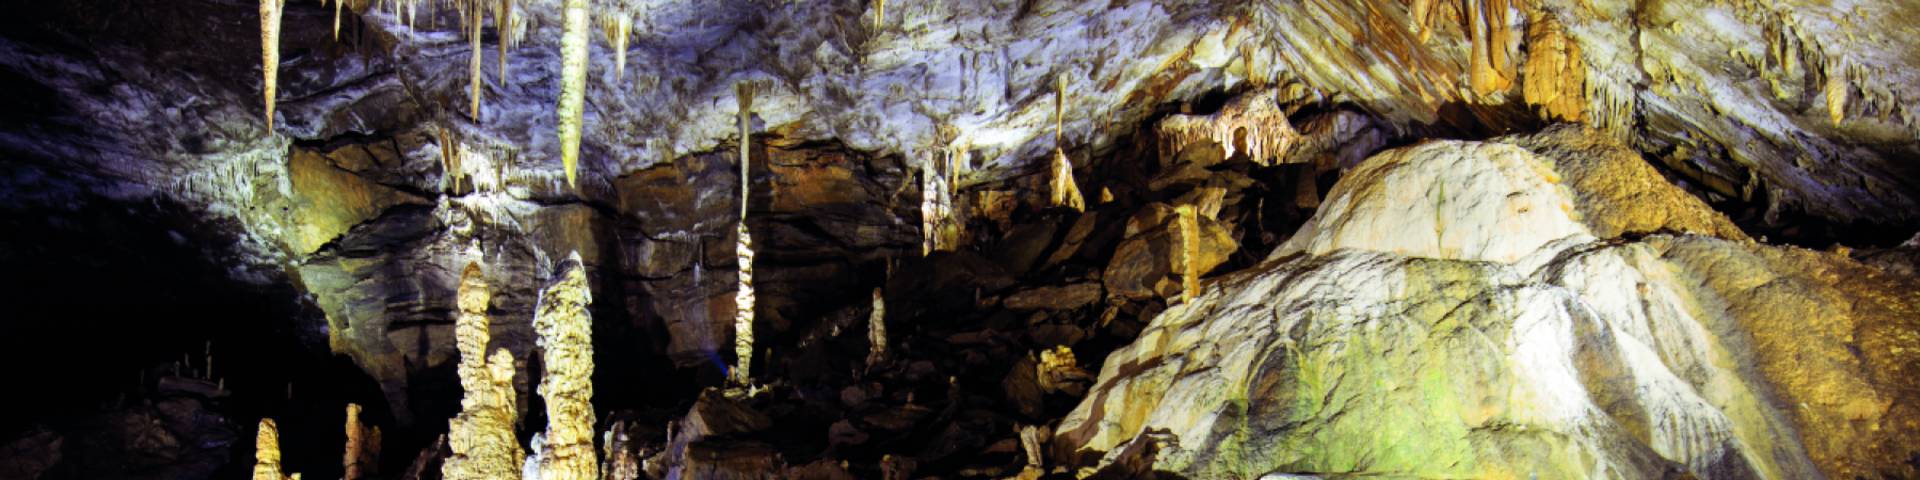 Lurgrotte die Tropfsteinhöhle in Semriach